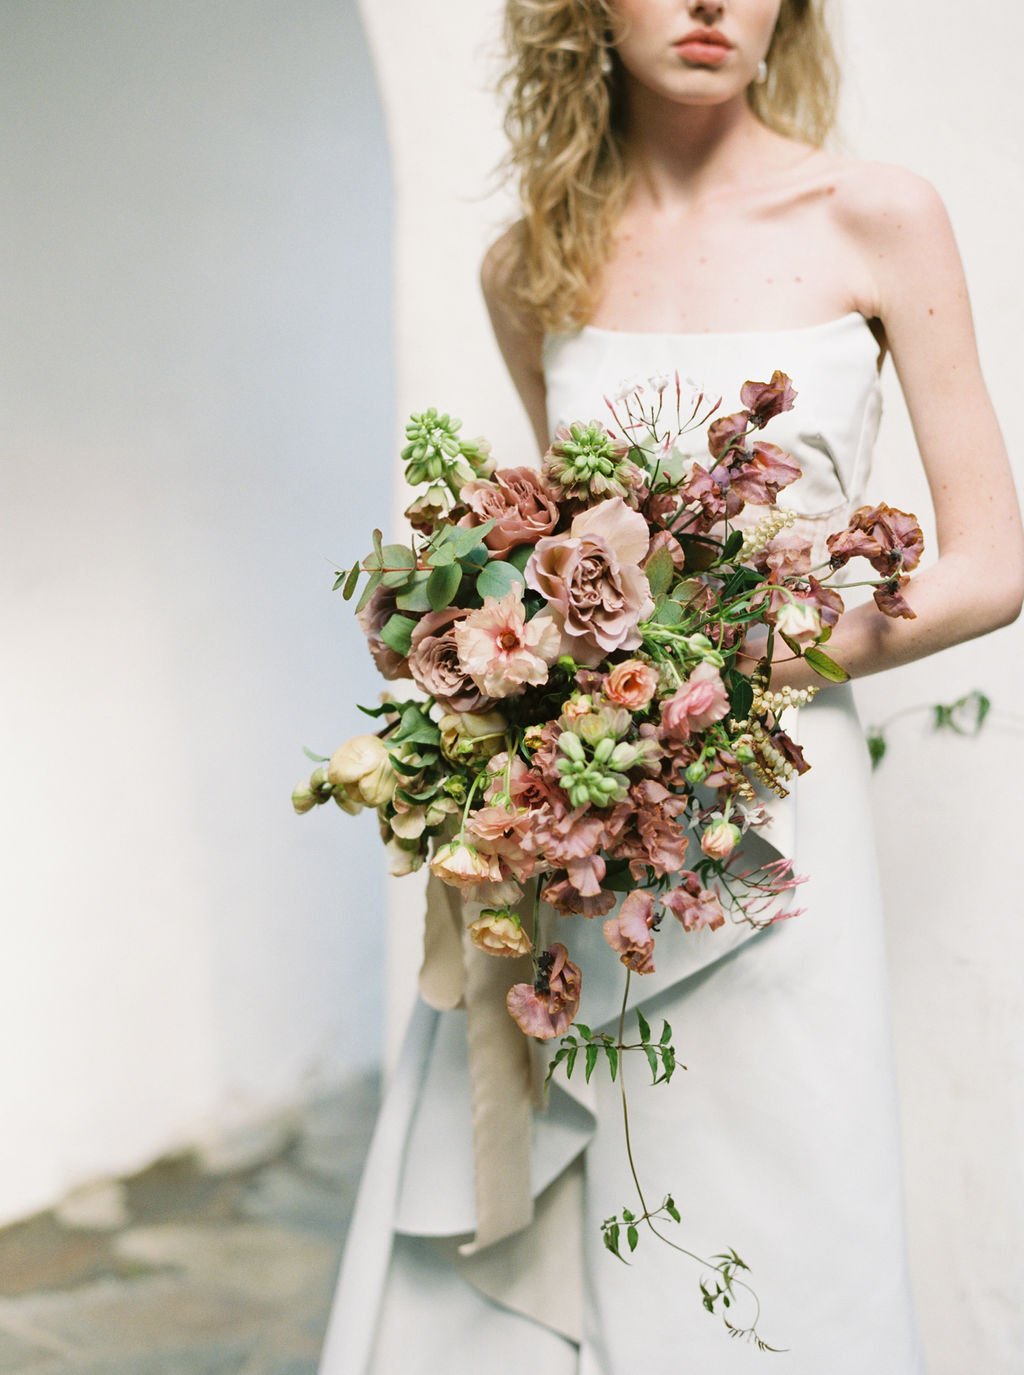 Moss Floral Design  Destination Wedding Florist based in Dallas